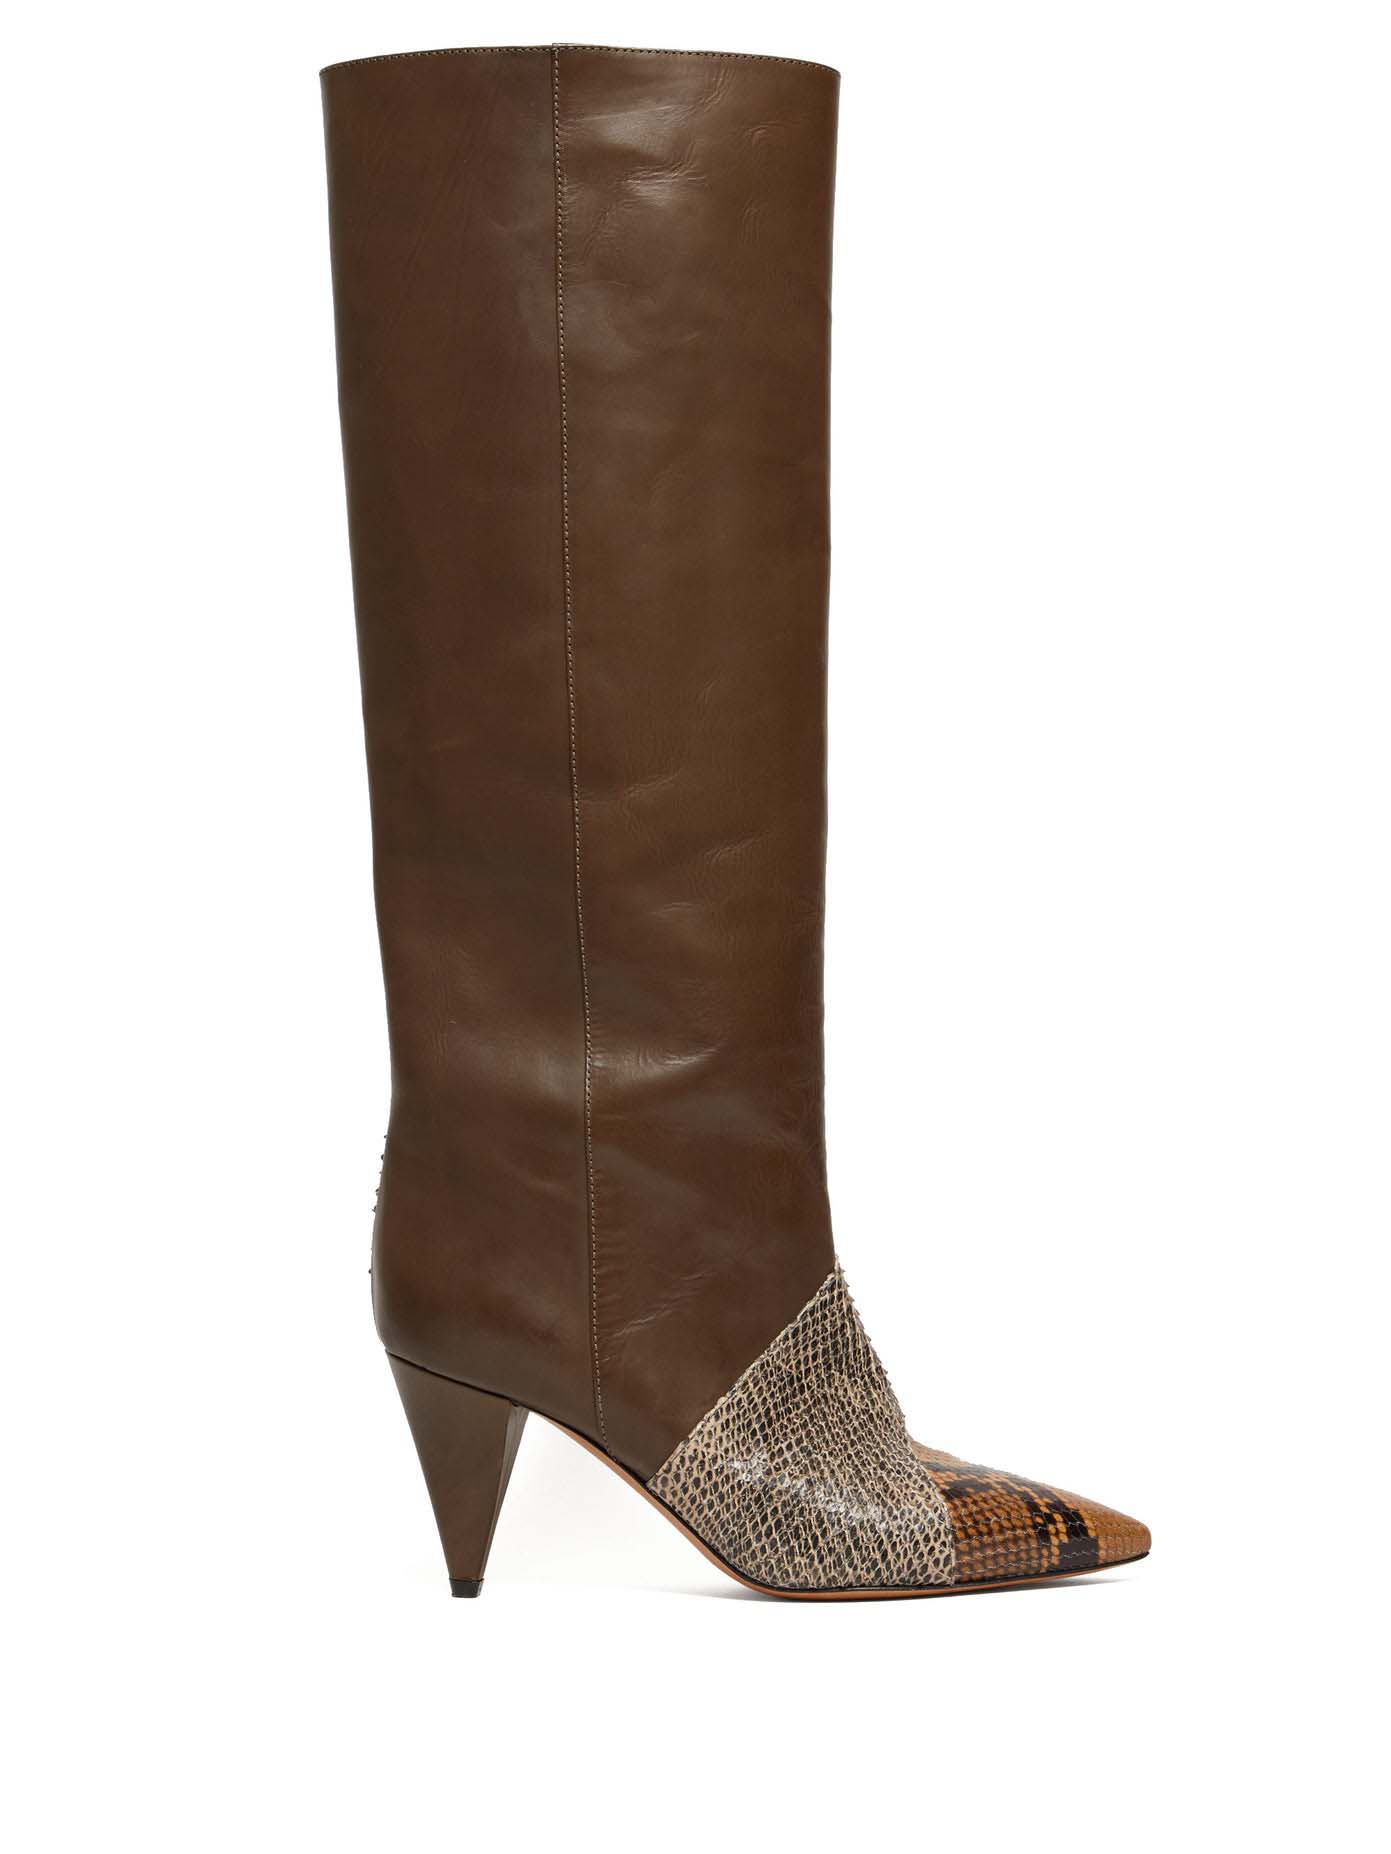 Isabel Marant 'Laomi' high boot, $1,980; matchesfashion.com